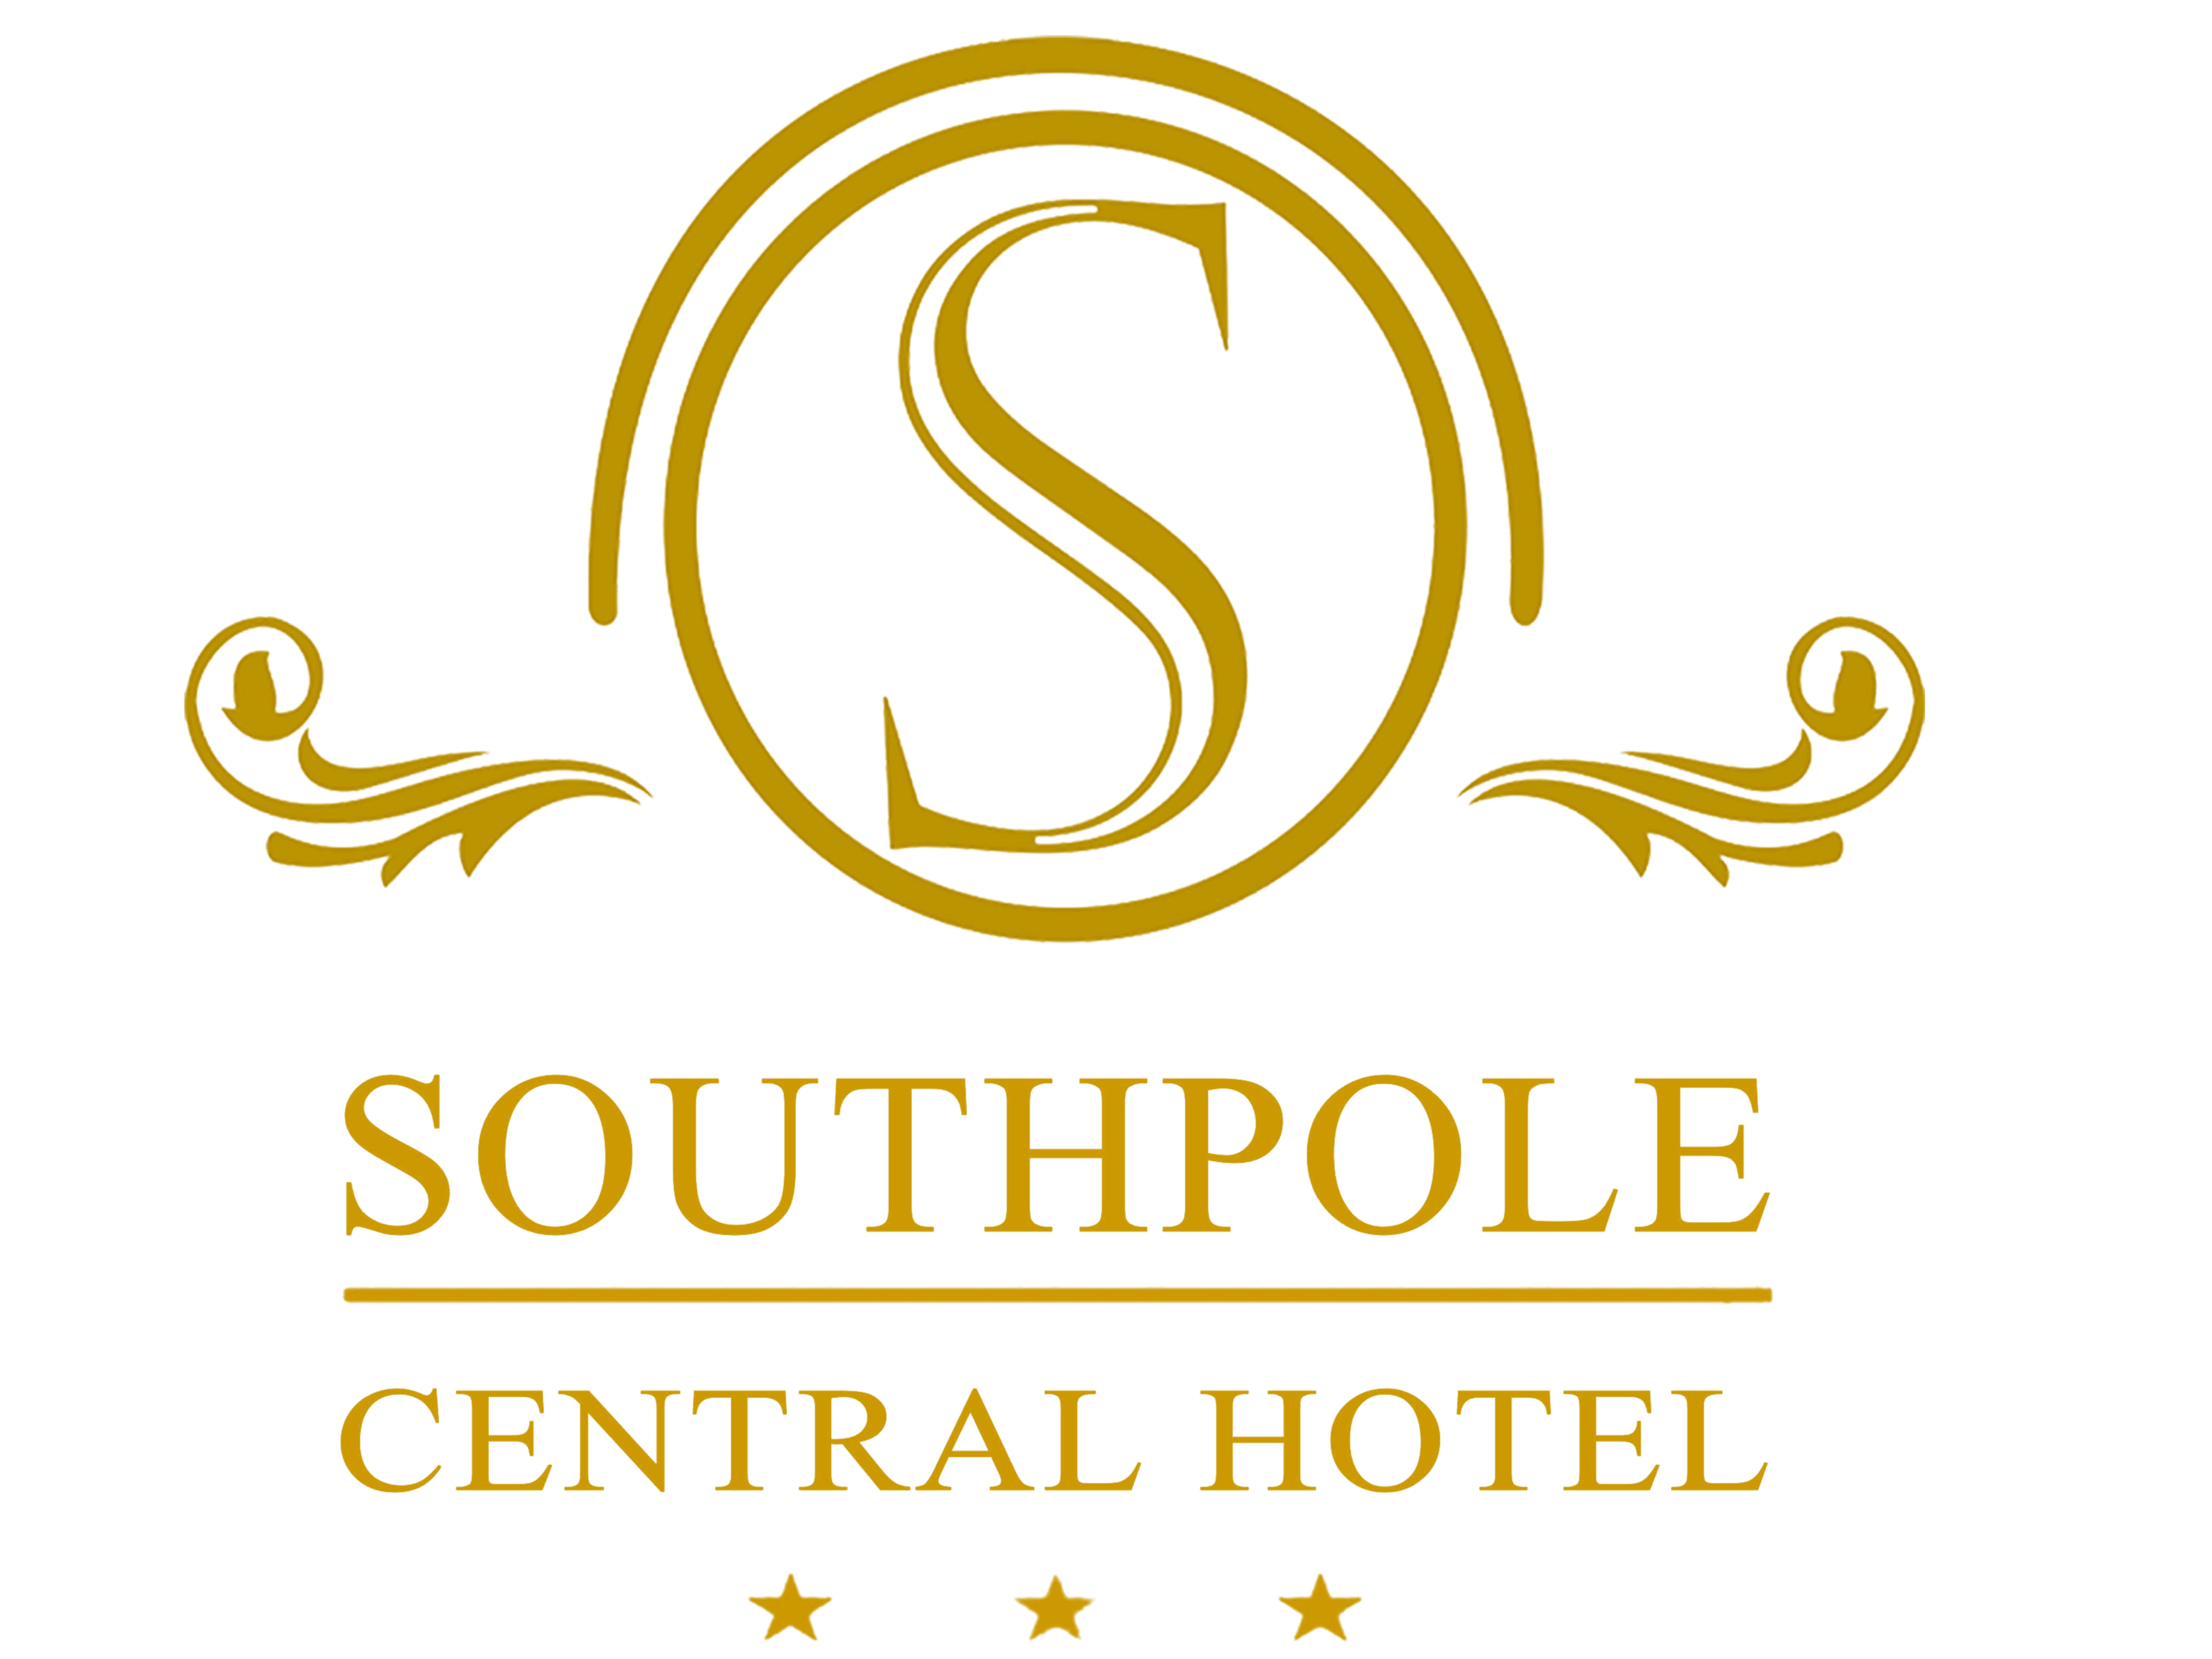 Southpole Central Hotel logo